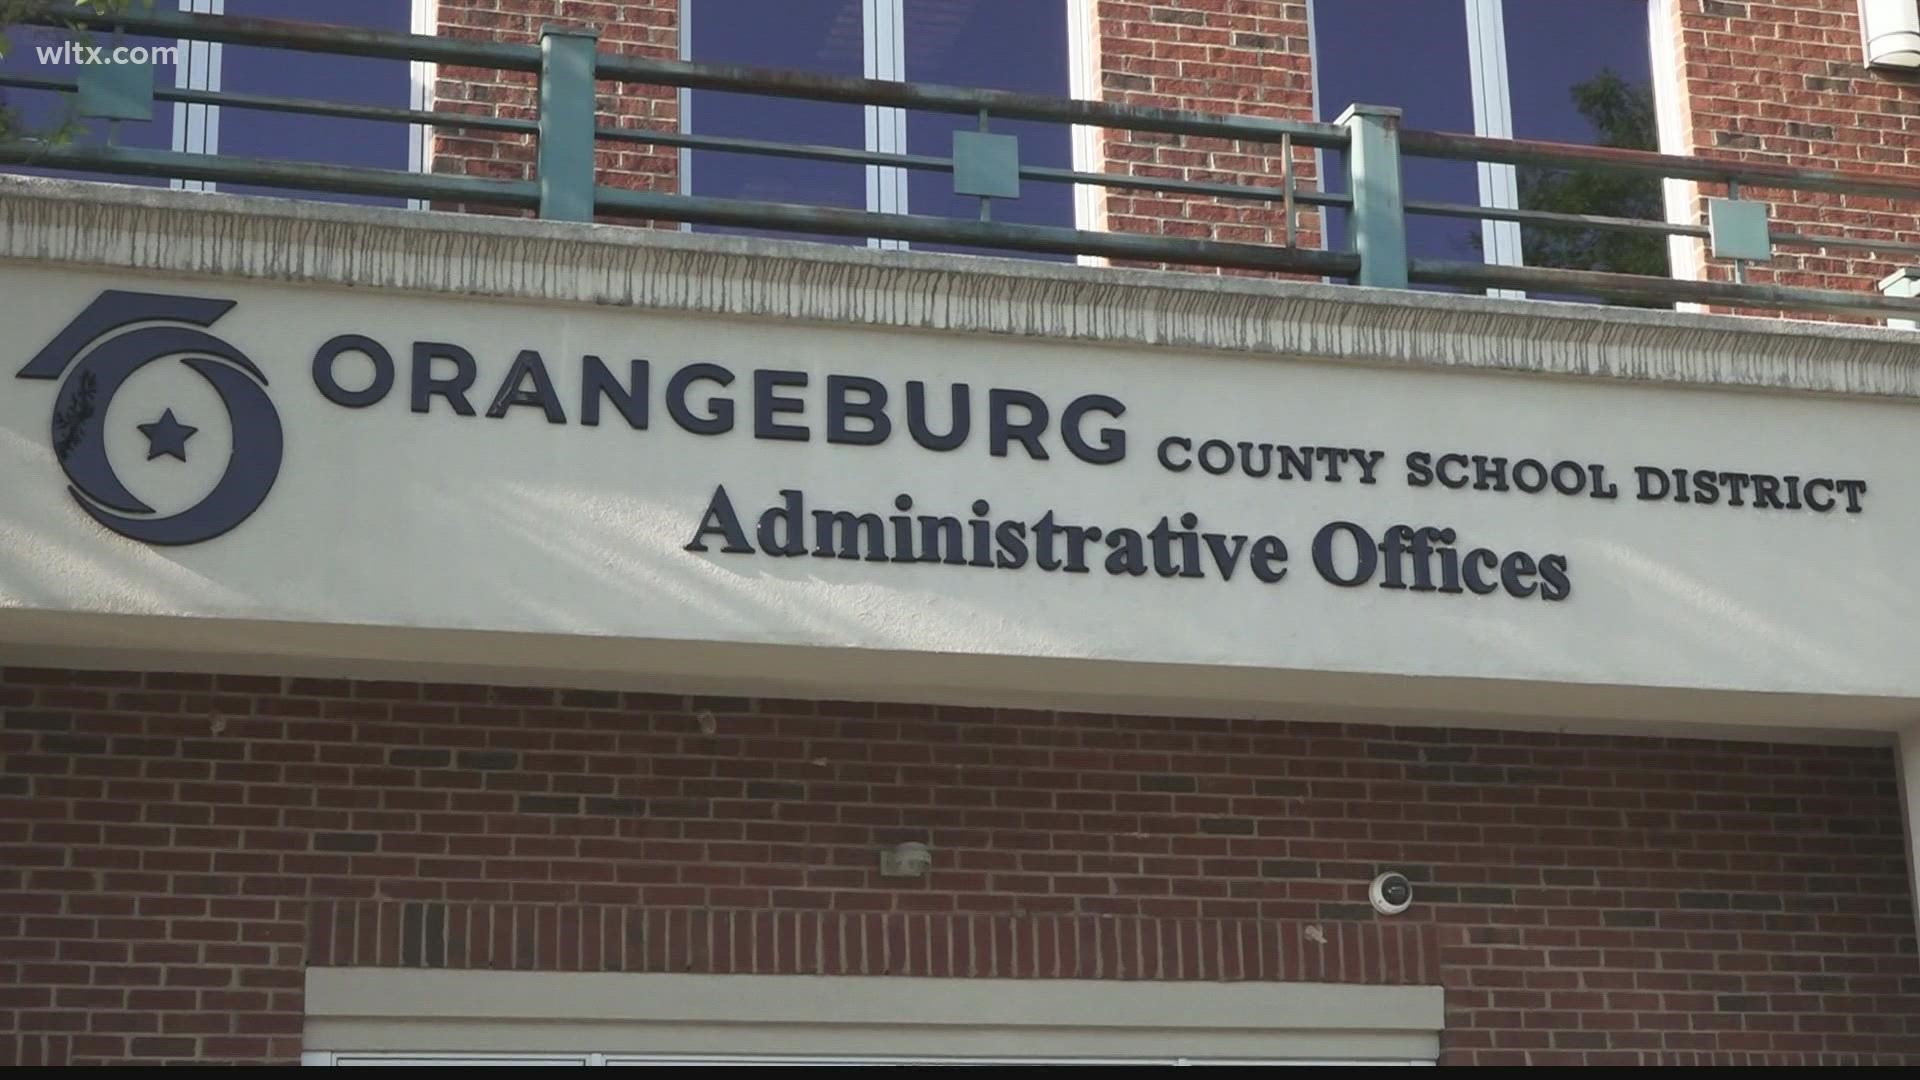 In November, voters will decide on school facility improvements in the Orangeburg County school district.